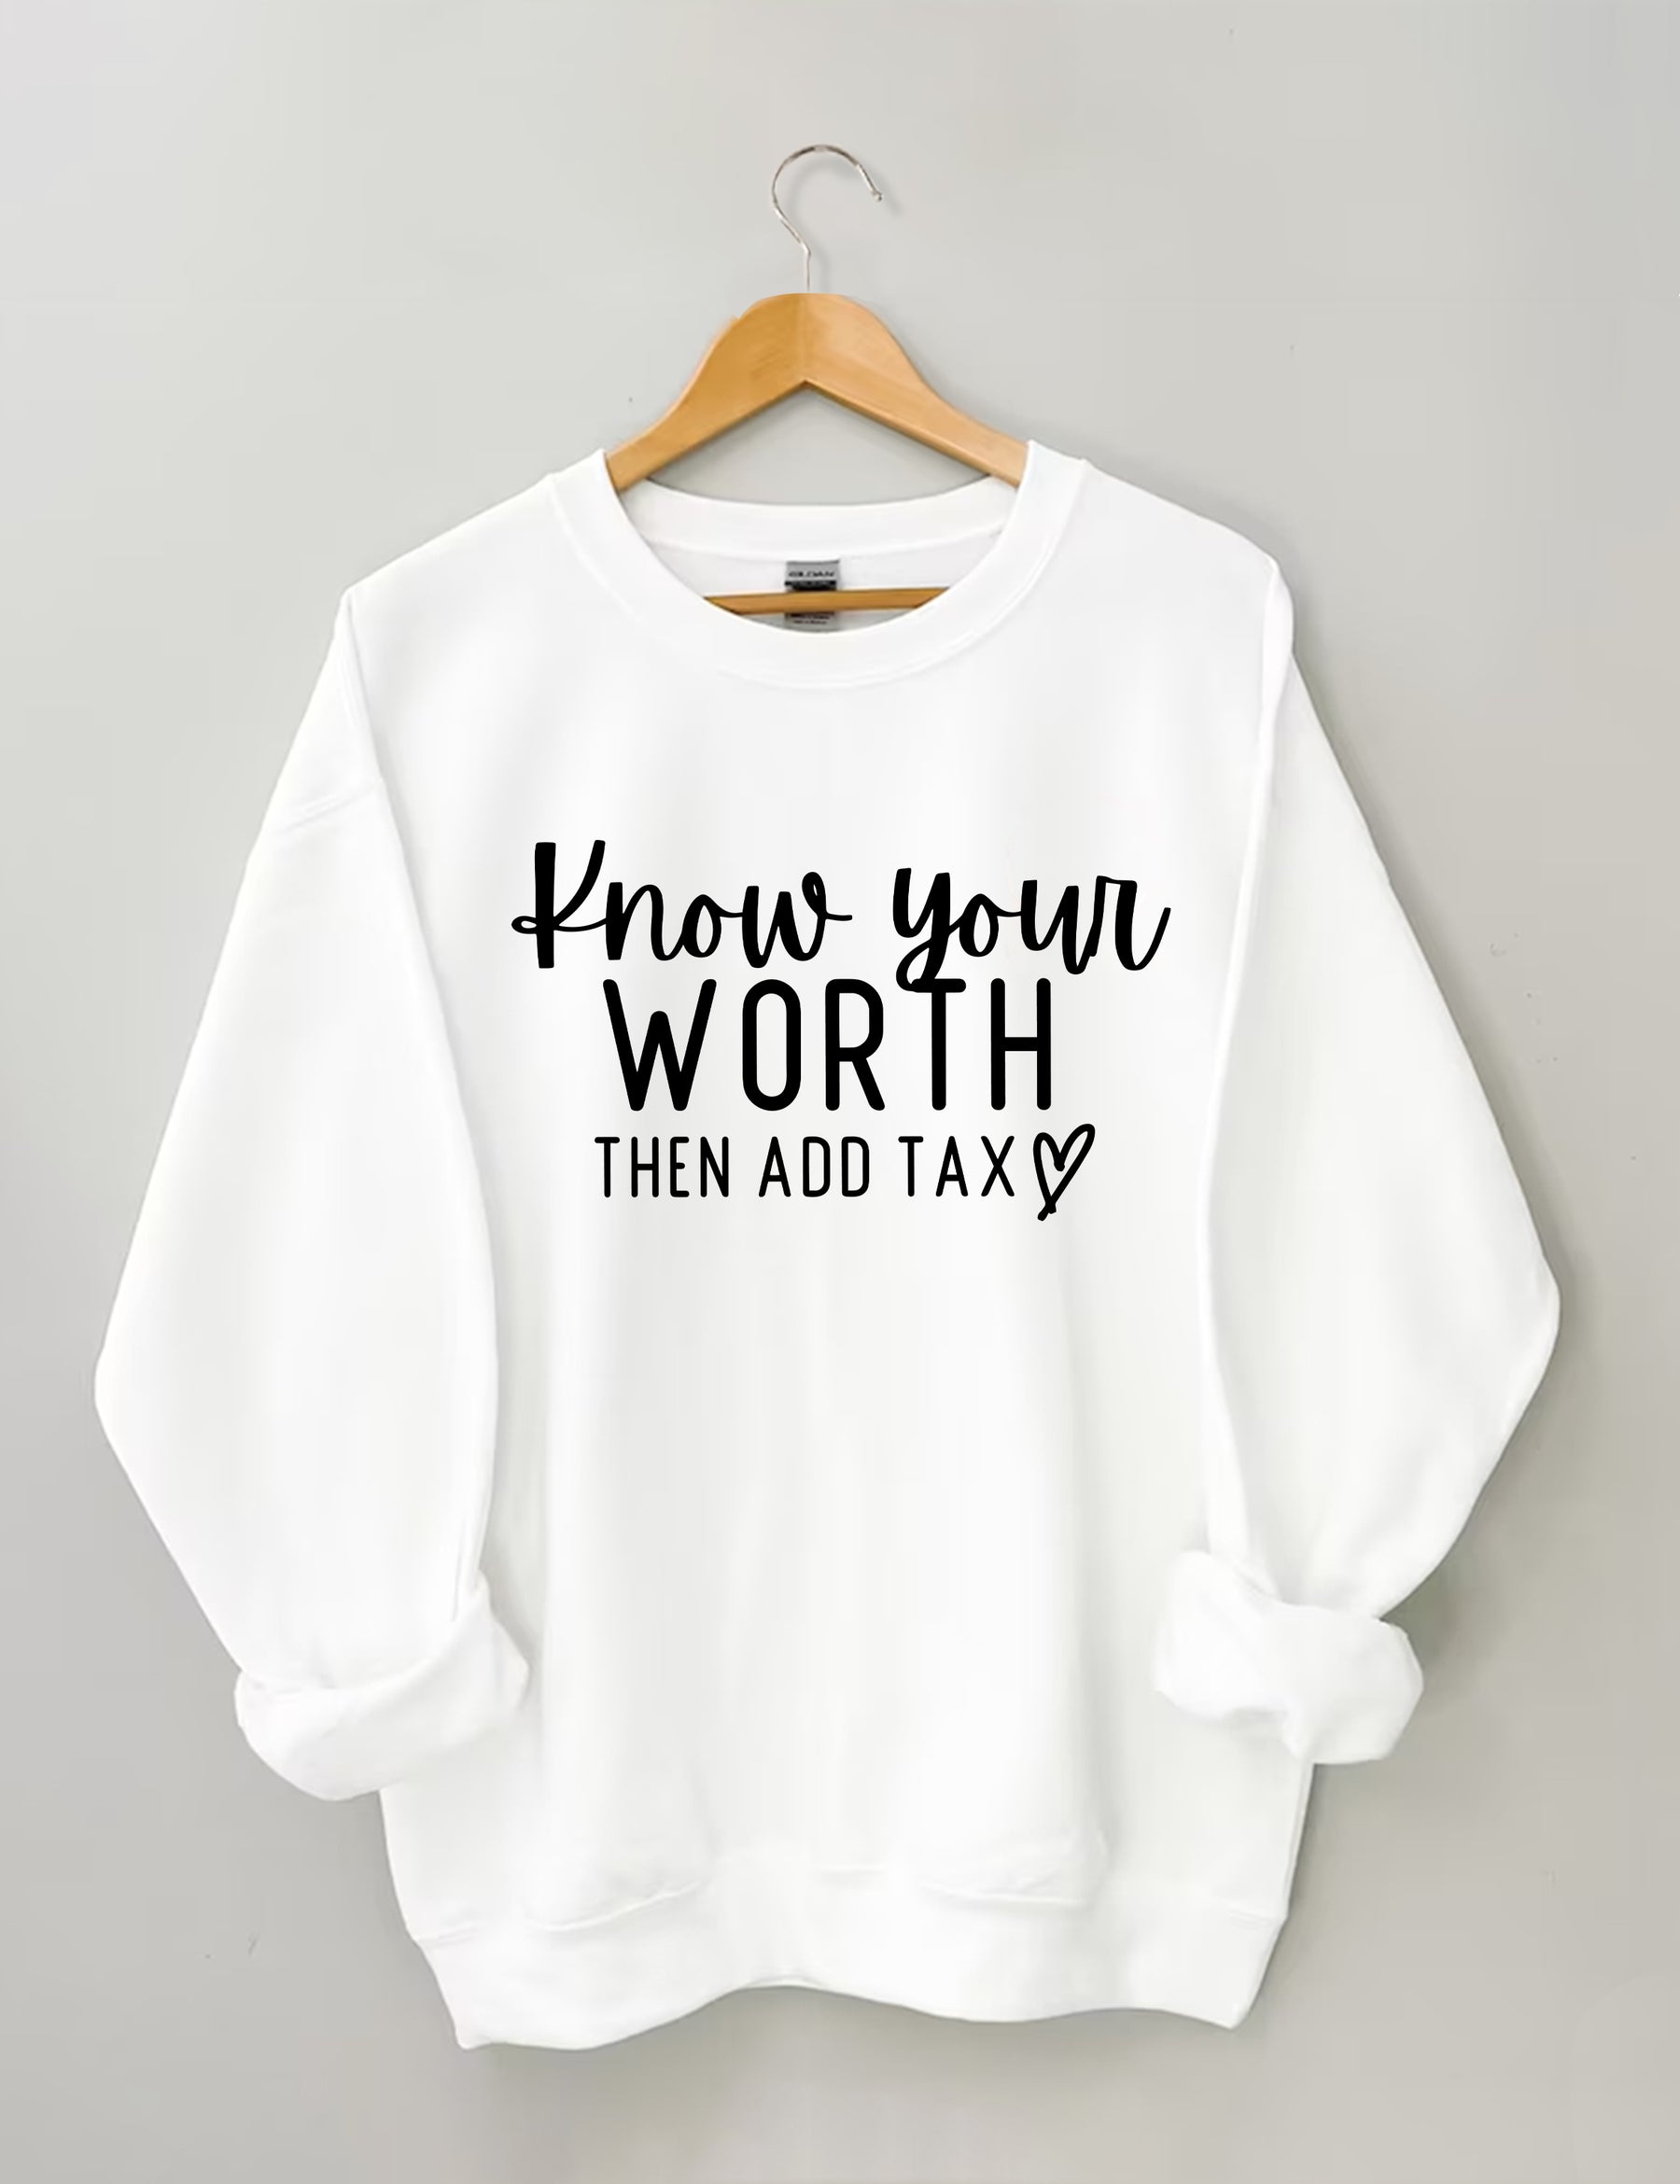 Know You Worth Then Add Tax Sweatshirt